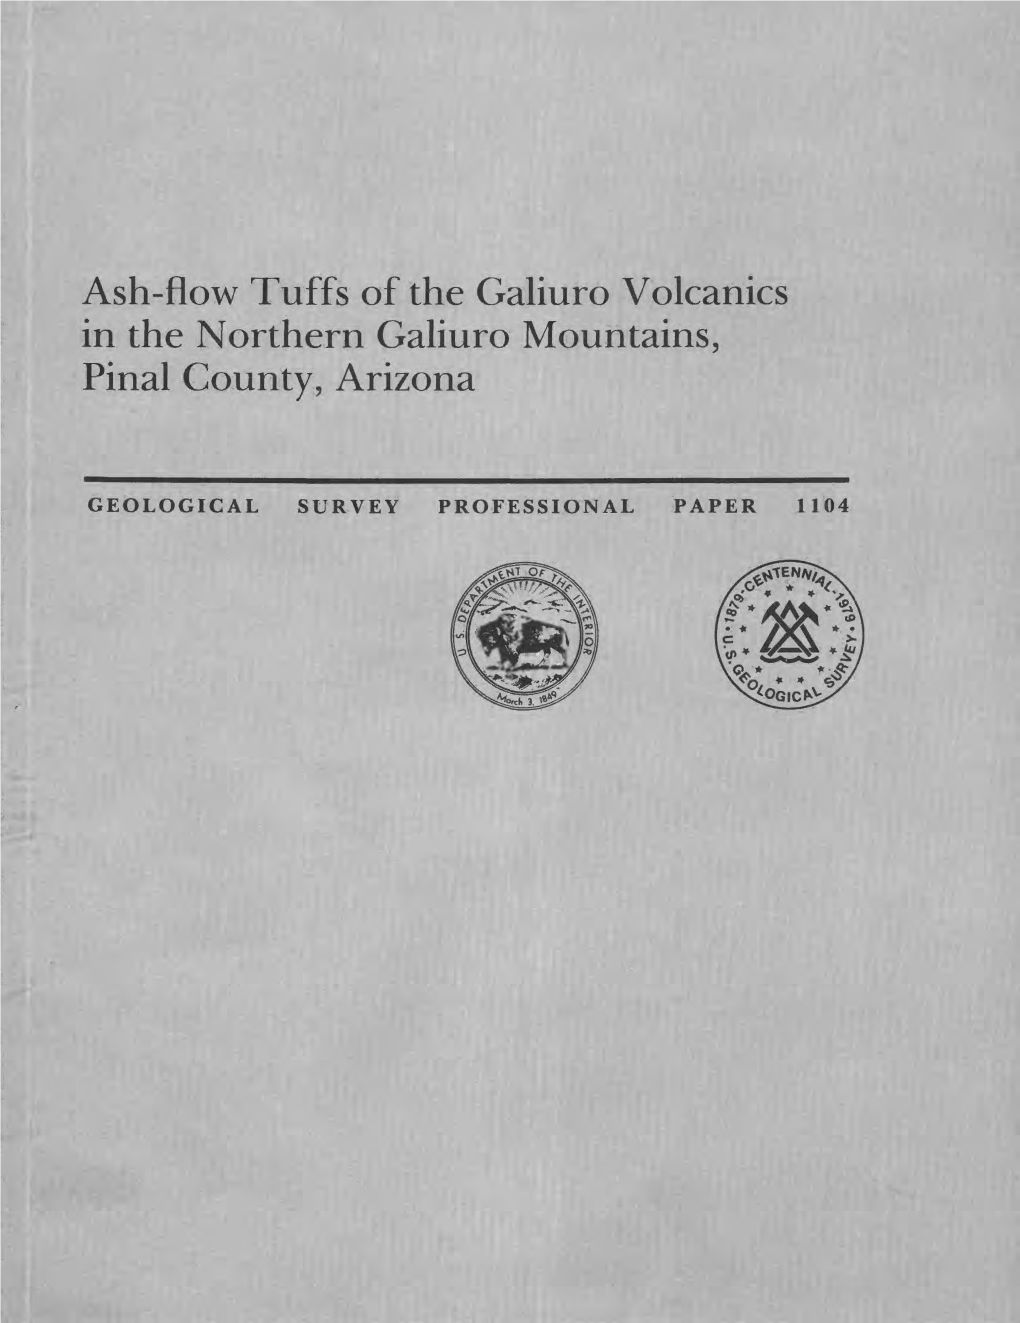 Ash-Flow Tuffs of the Galiuro Volcanics in the Northern Galiuro Mountains, Final County, Arizona